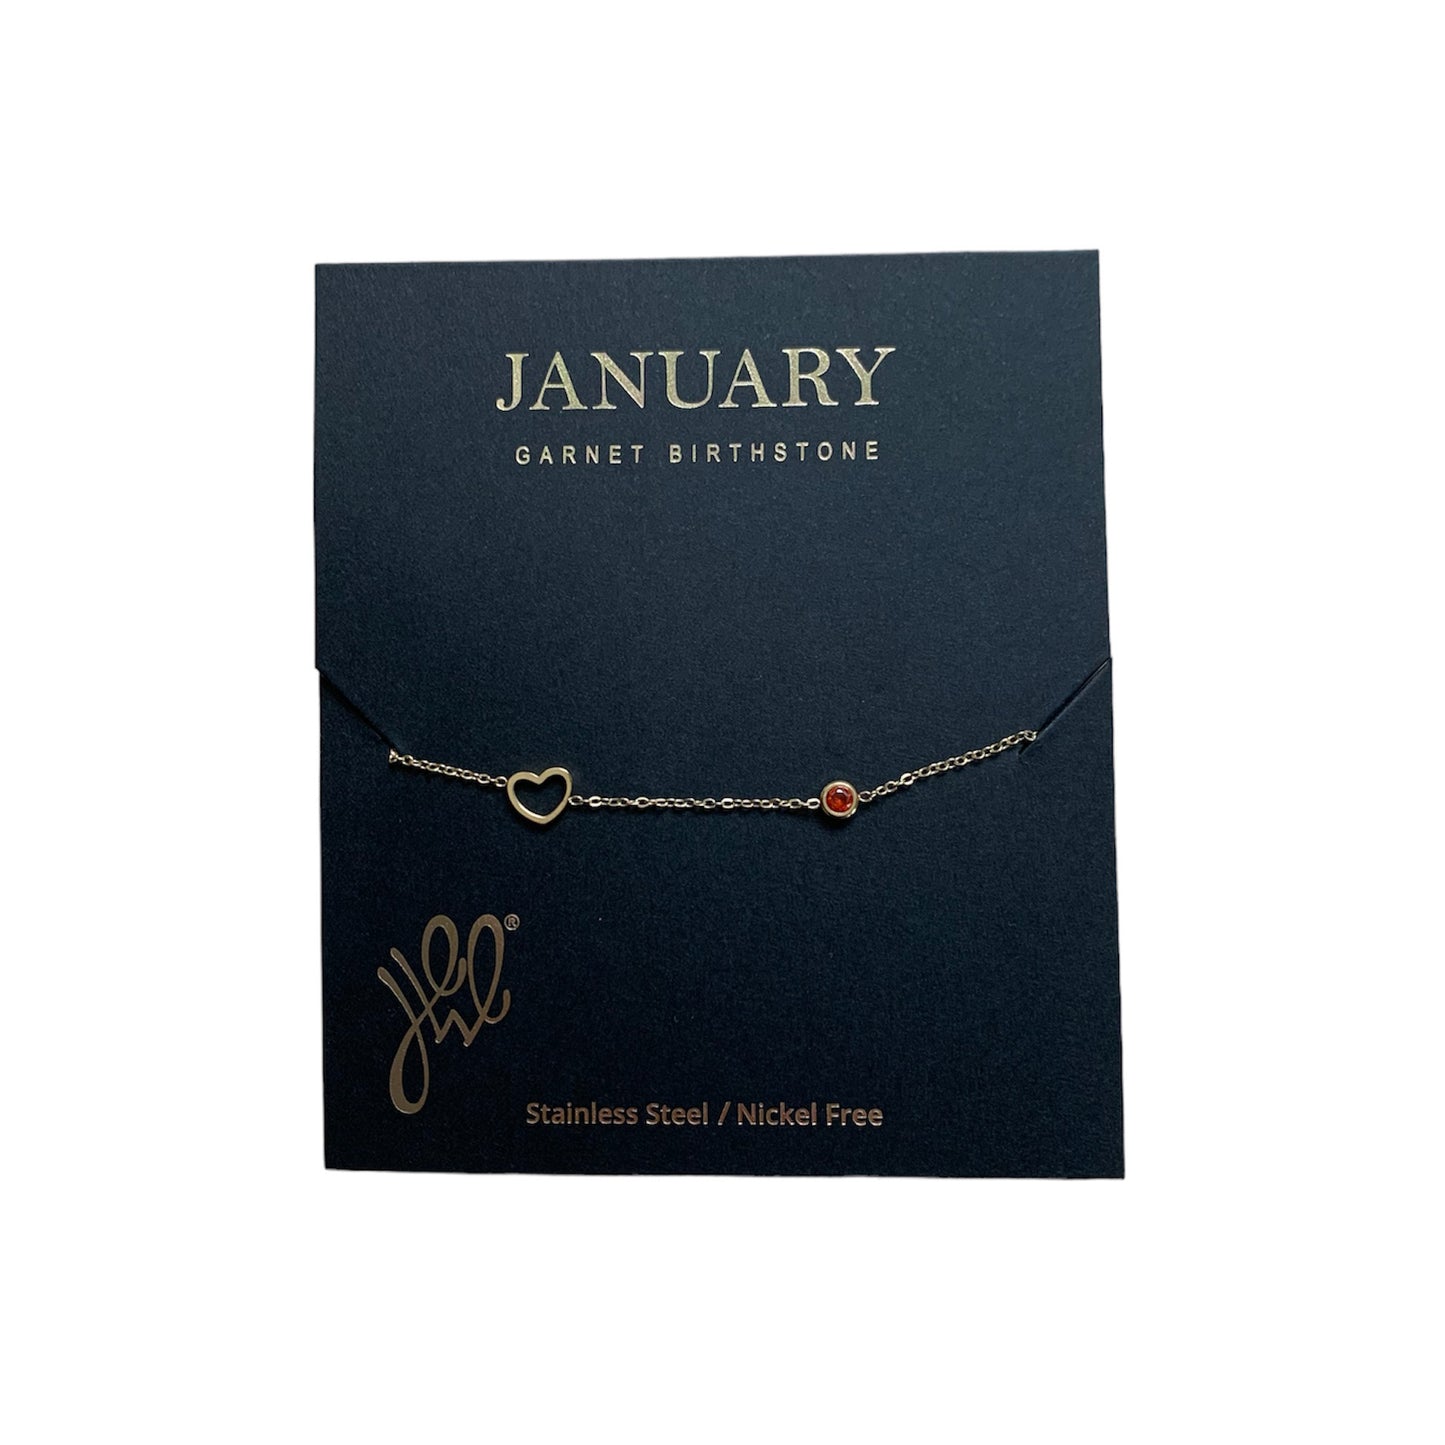 Birthstone armband - January